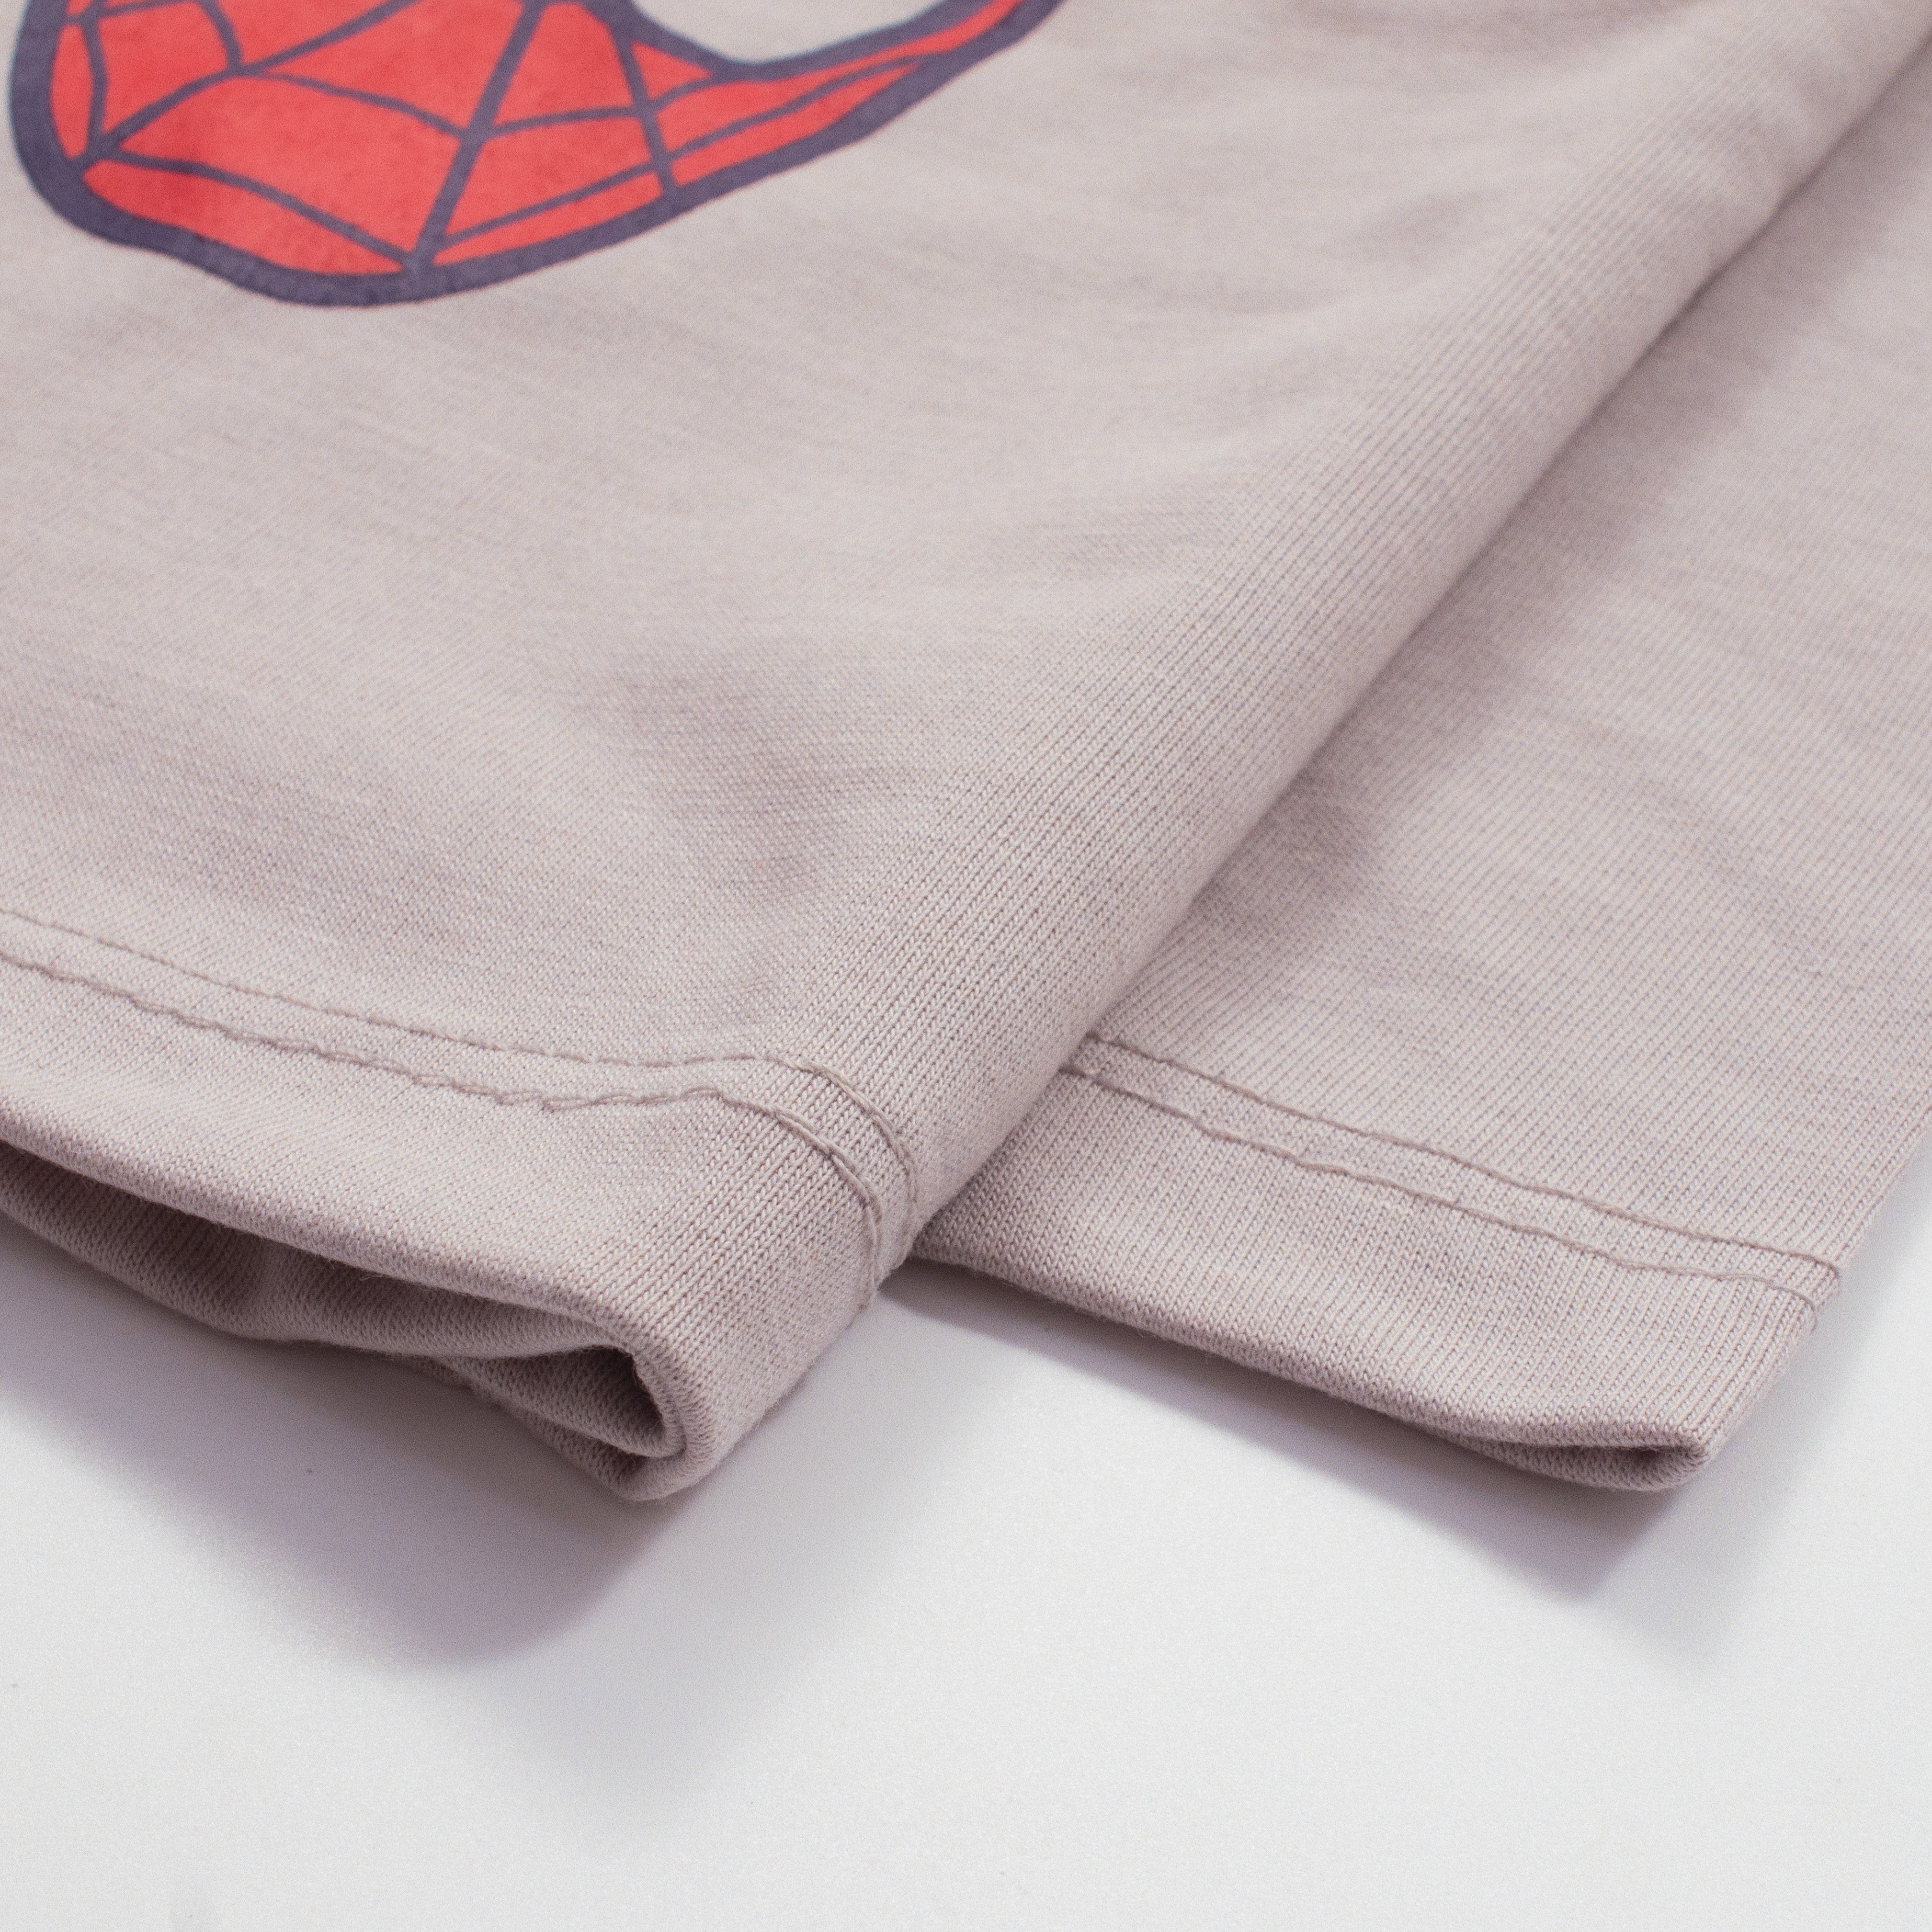 Boys Printed Full Sleeve Suit (Spider)